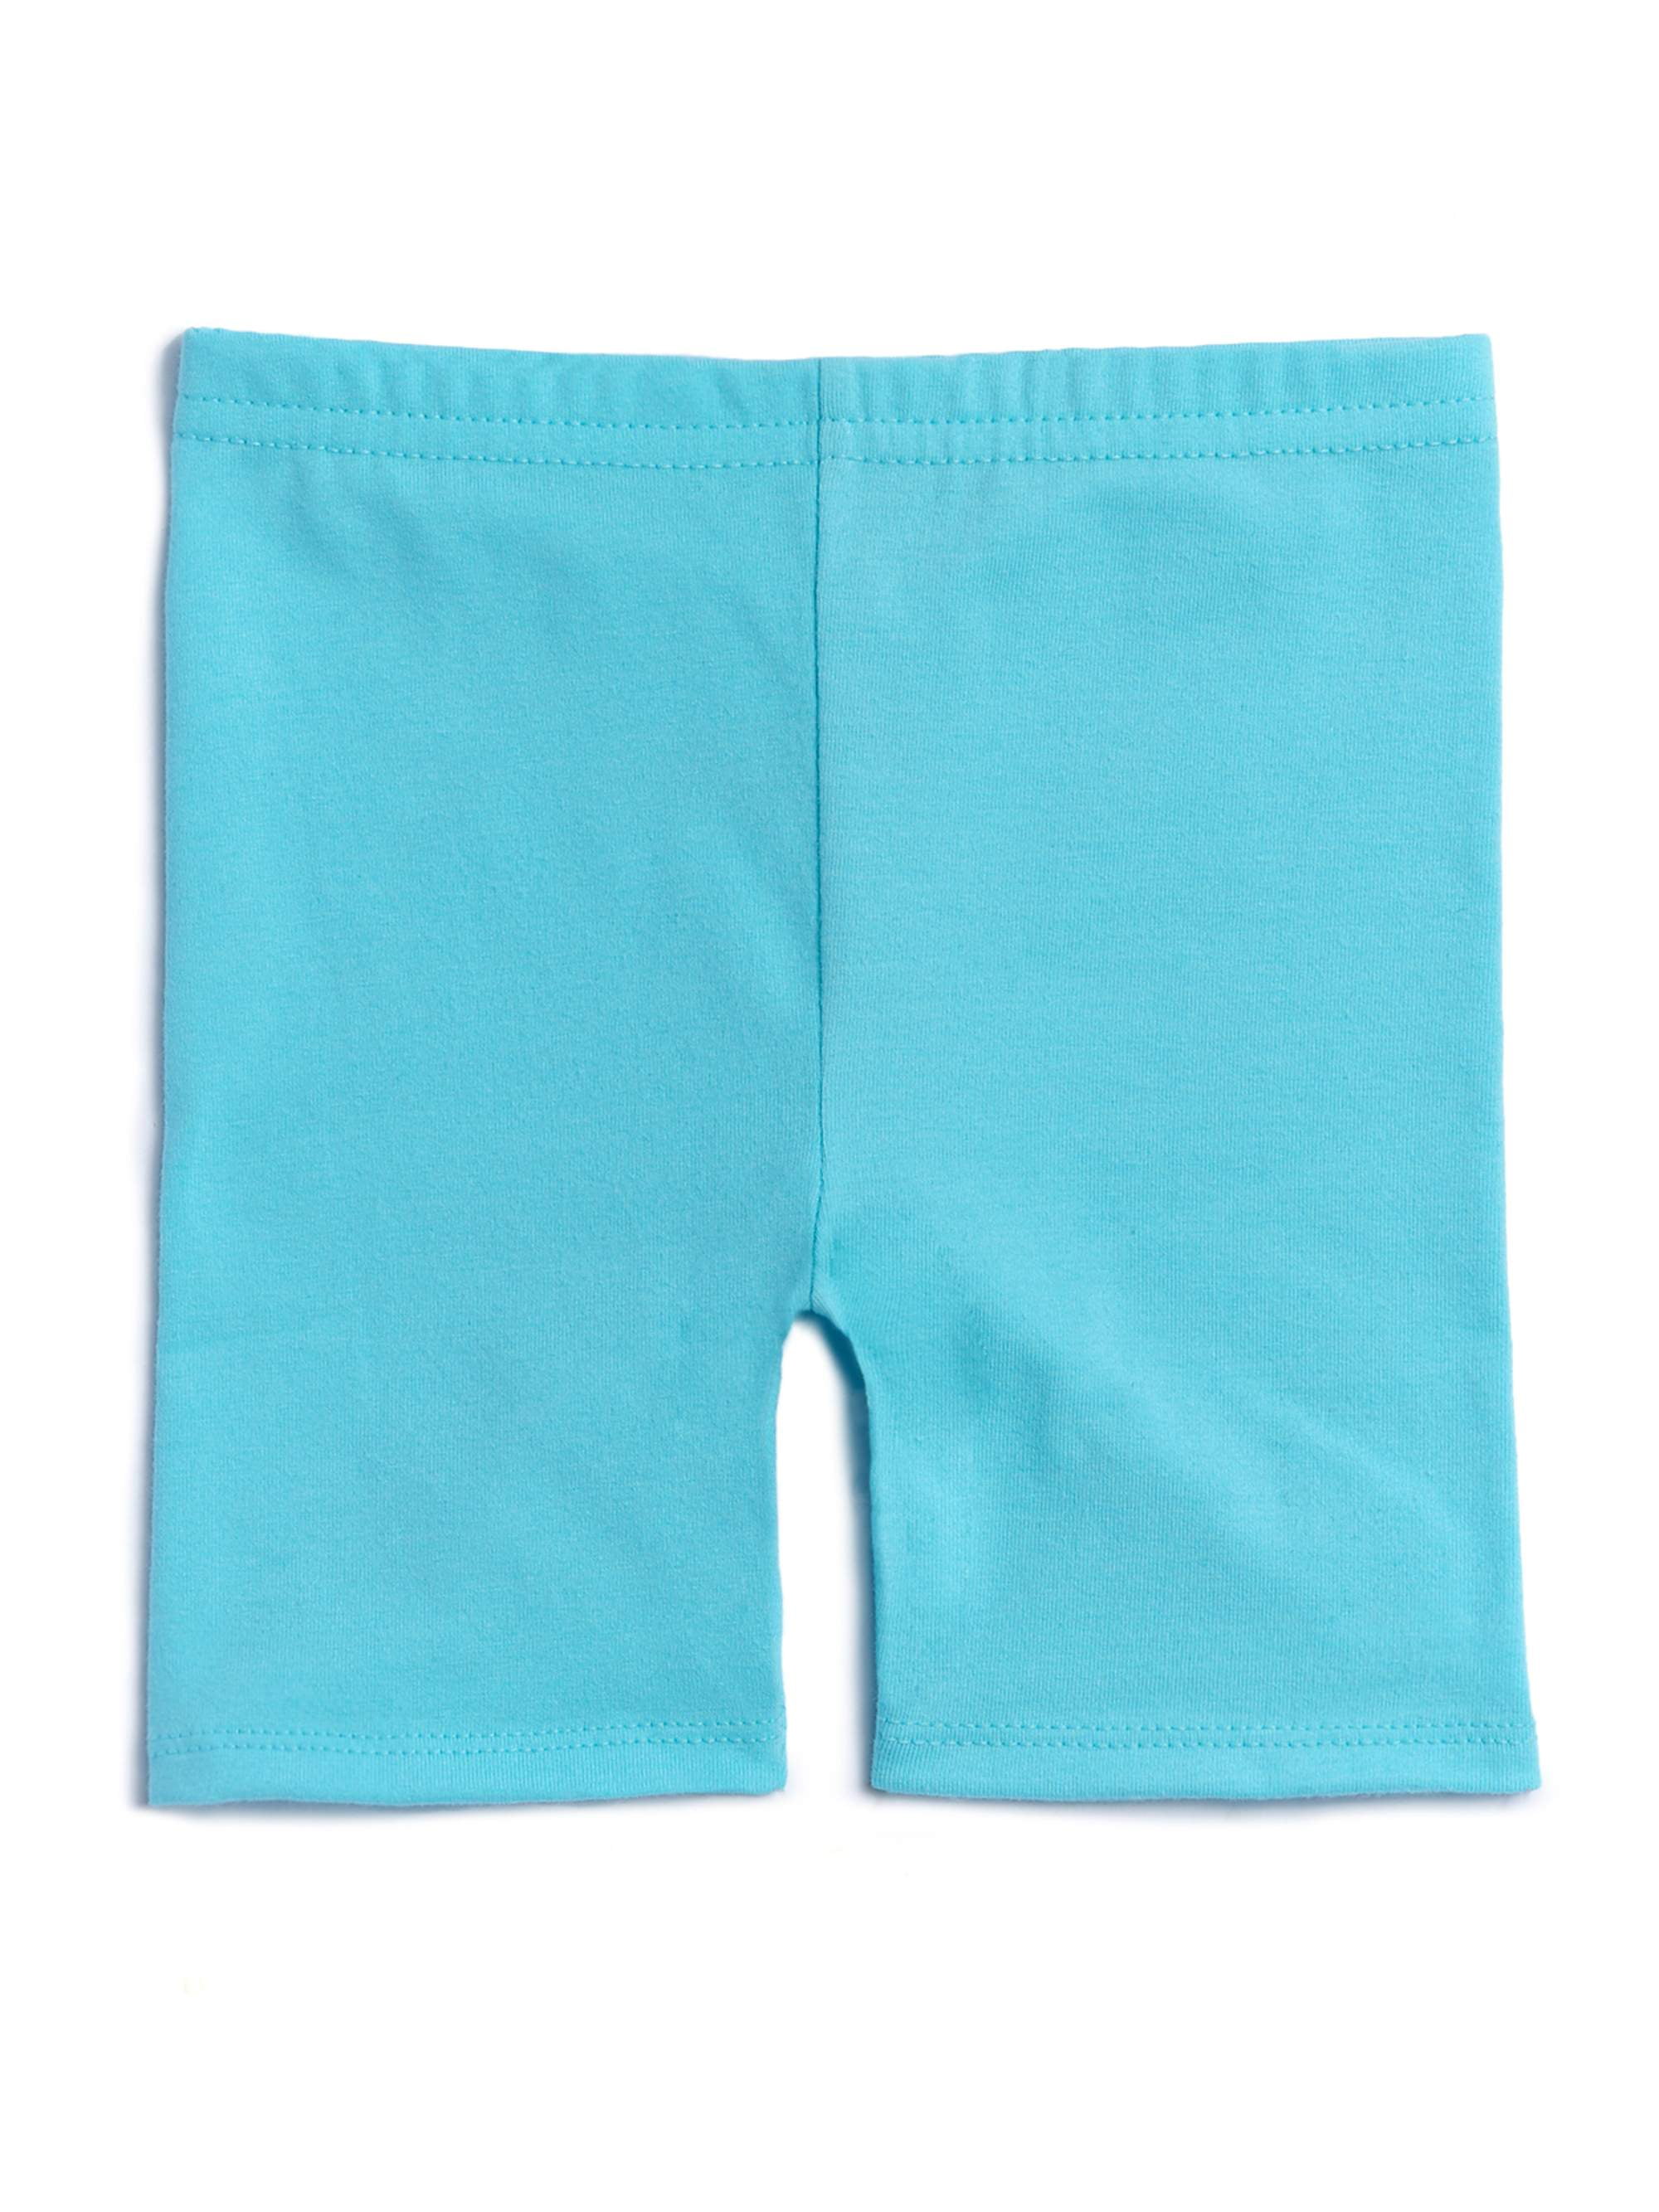 shorts for girls at walmart